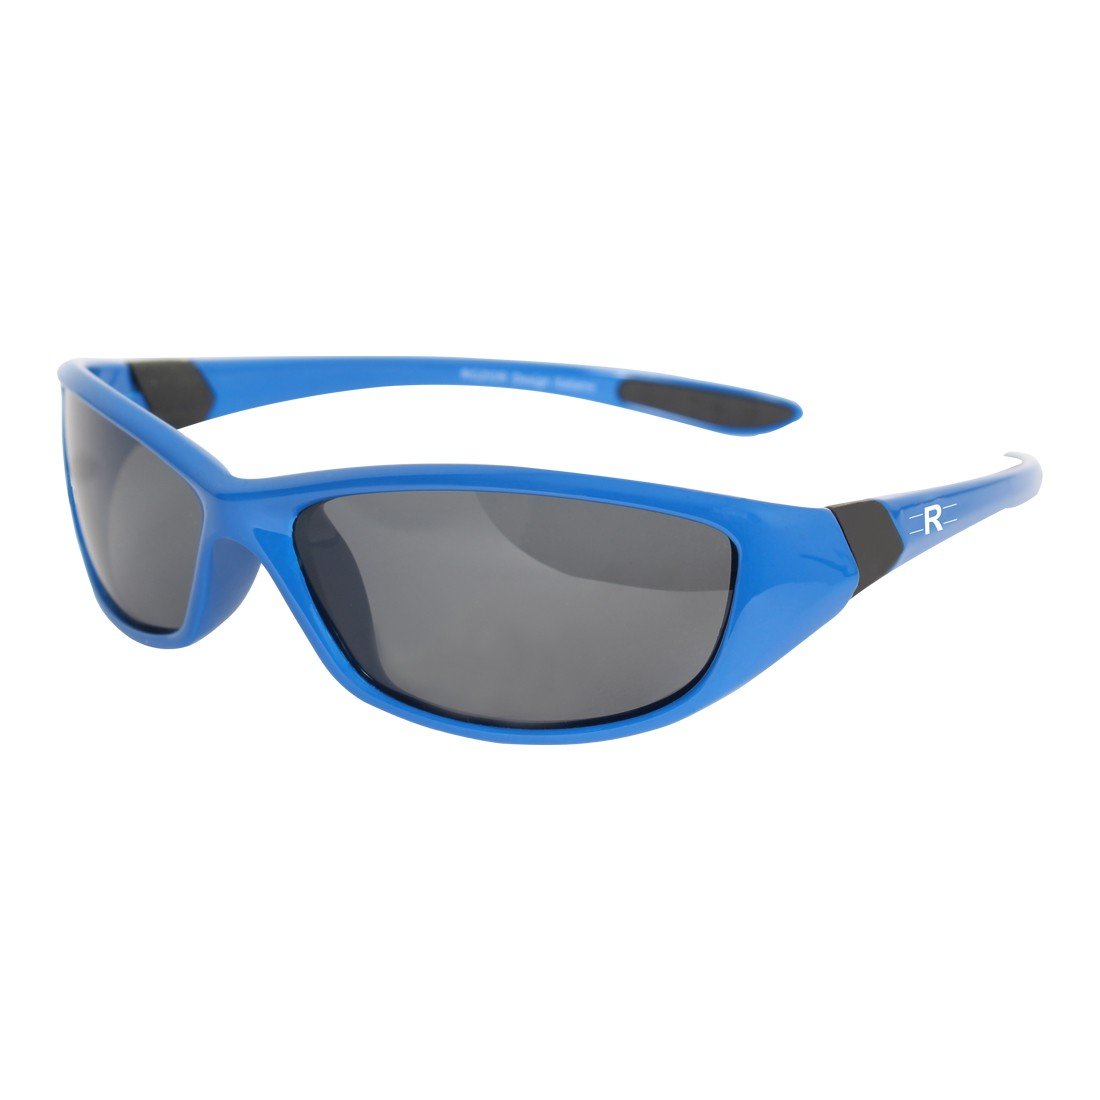 Rozior Men Women Polarized Sunglass with UV Protection Smoke Lens with Blue Frame, MODEL: RWPP510C2